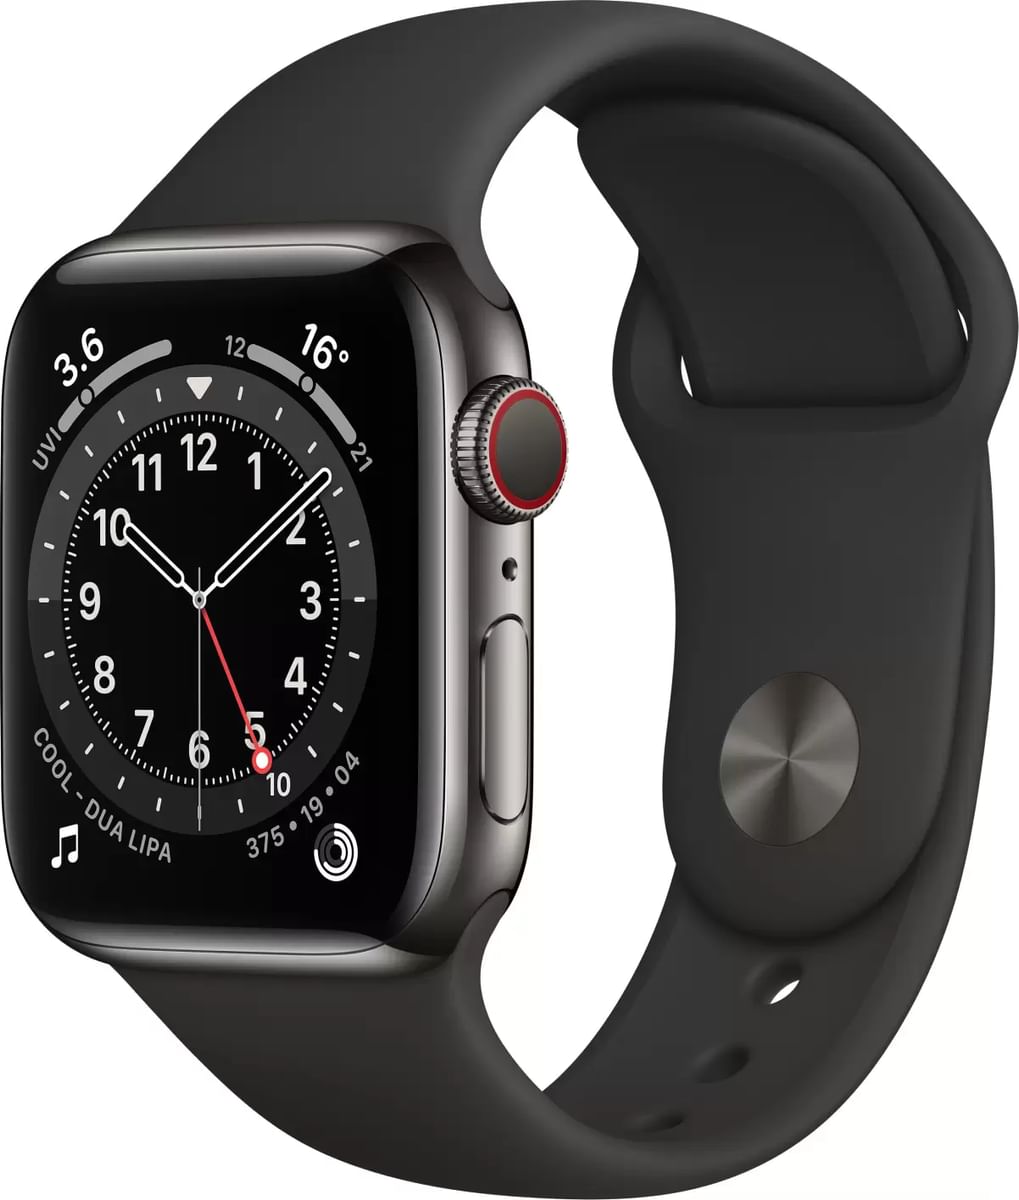 Apple Watch Series 6 Stainless Steel 40 mm (GPS + Cellular) Best Price Is The Apple Watch Stainless Steel Worth It